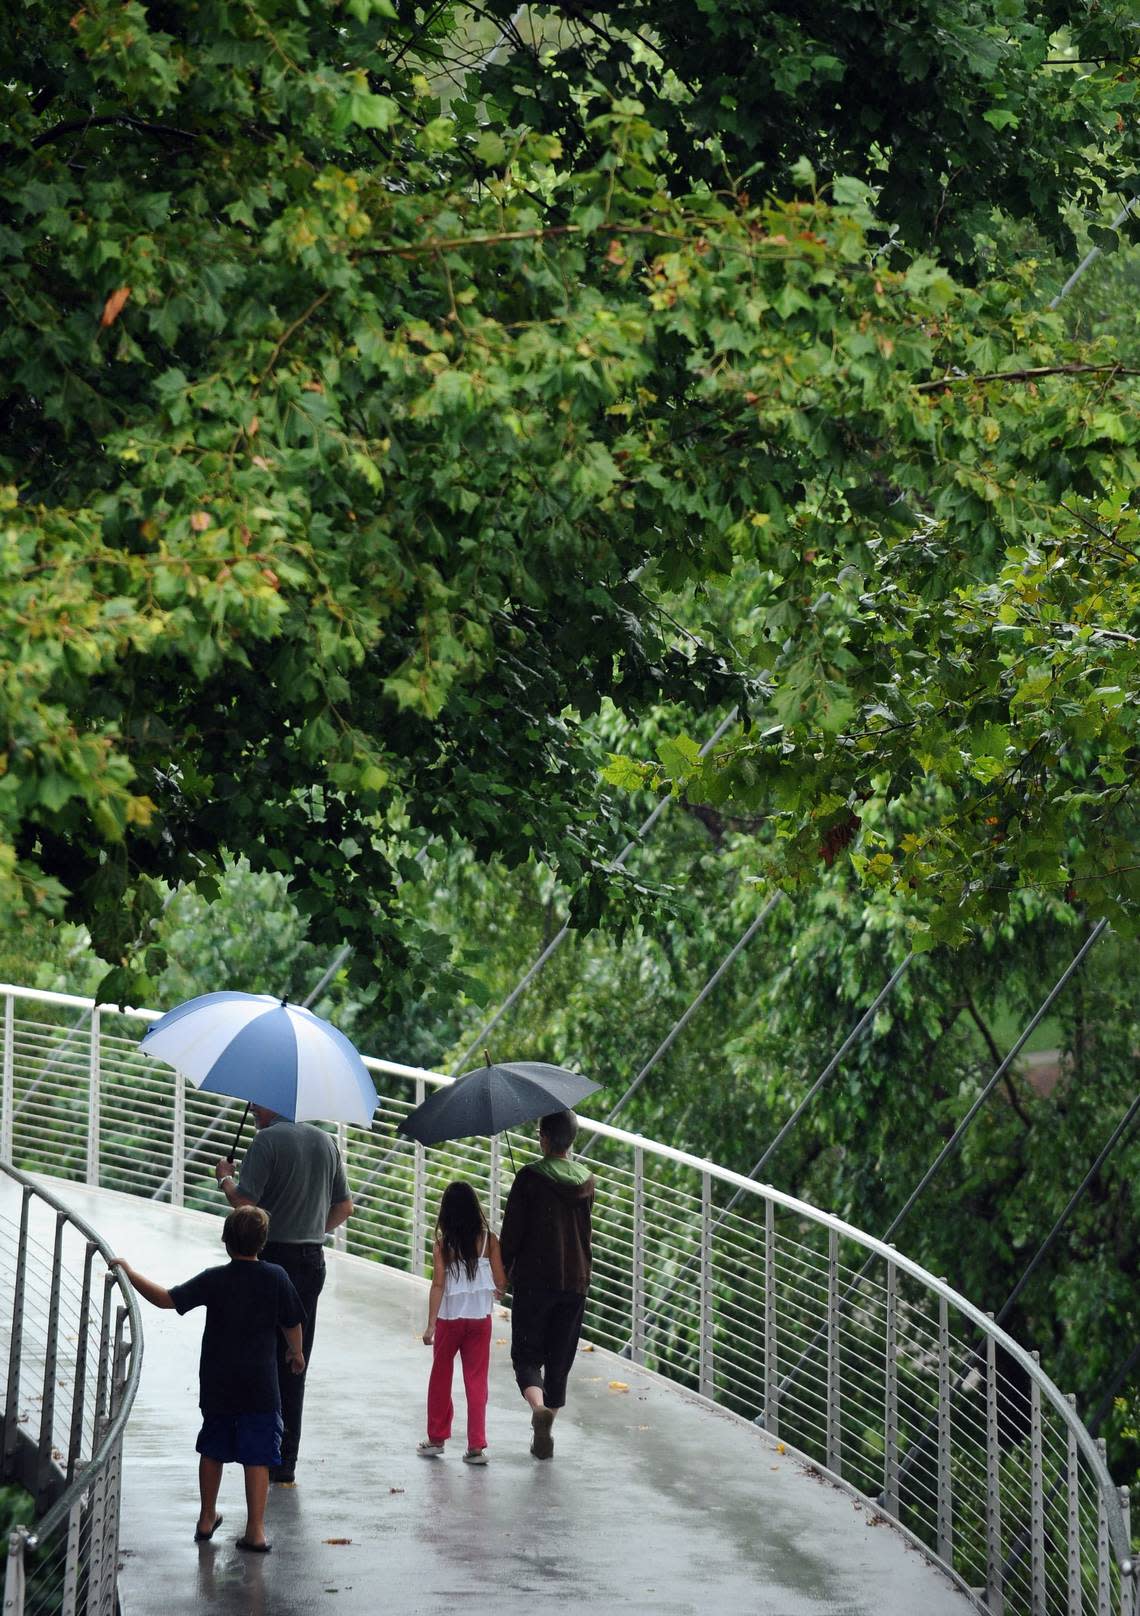 Pedestrians hold umbrellas as they walk across the Reedy River bridge at Falls Park on Thursday, Aug. 1, 2013.